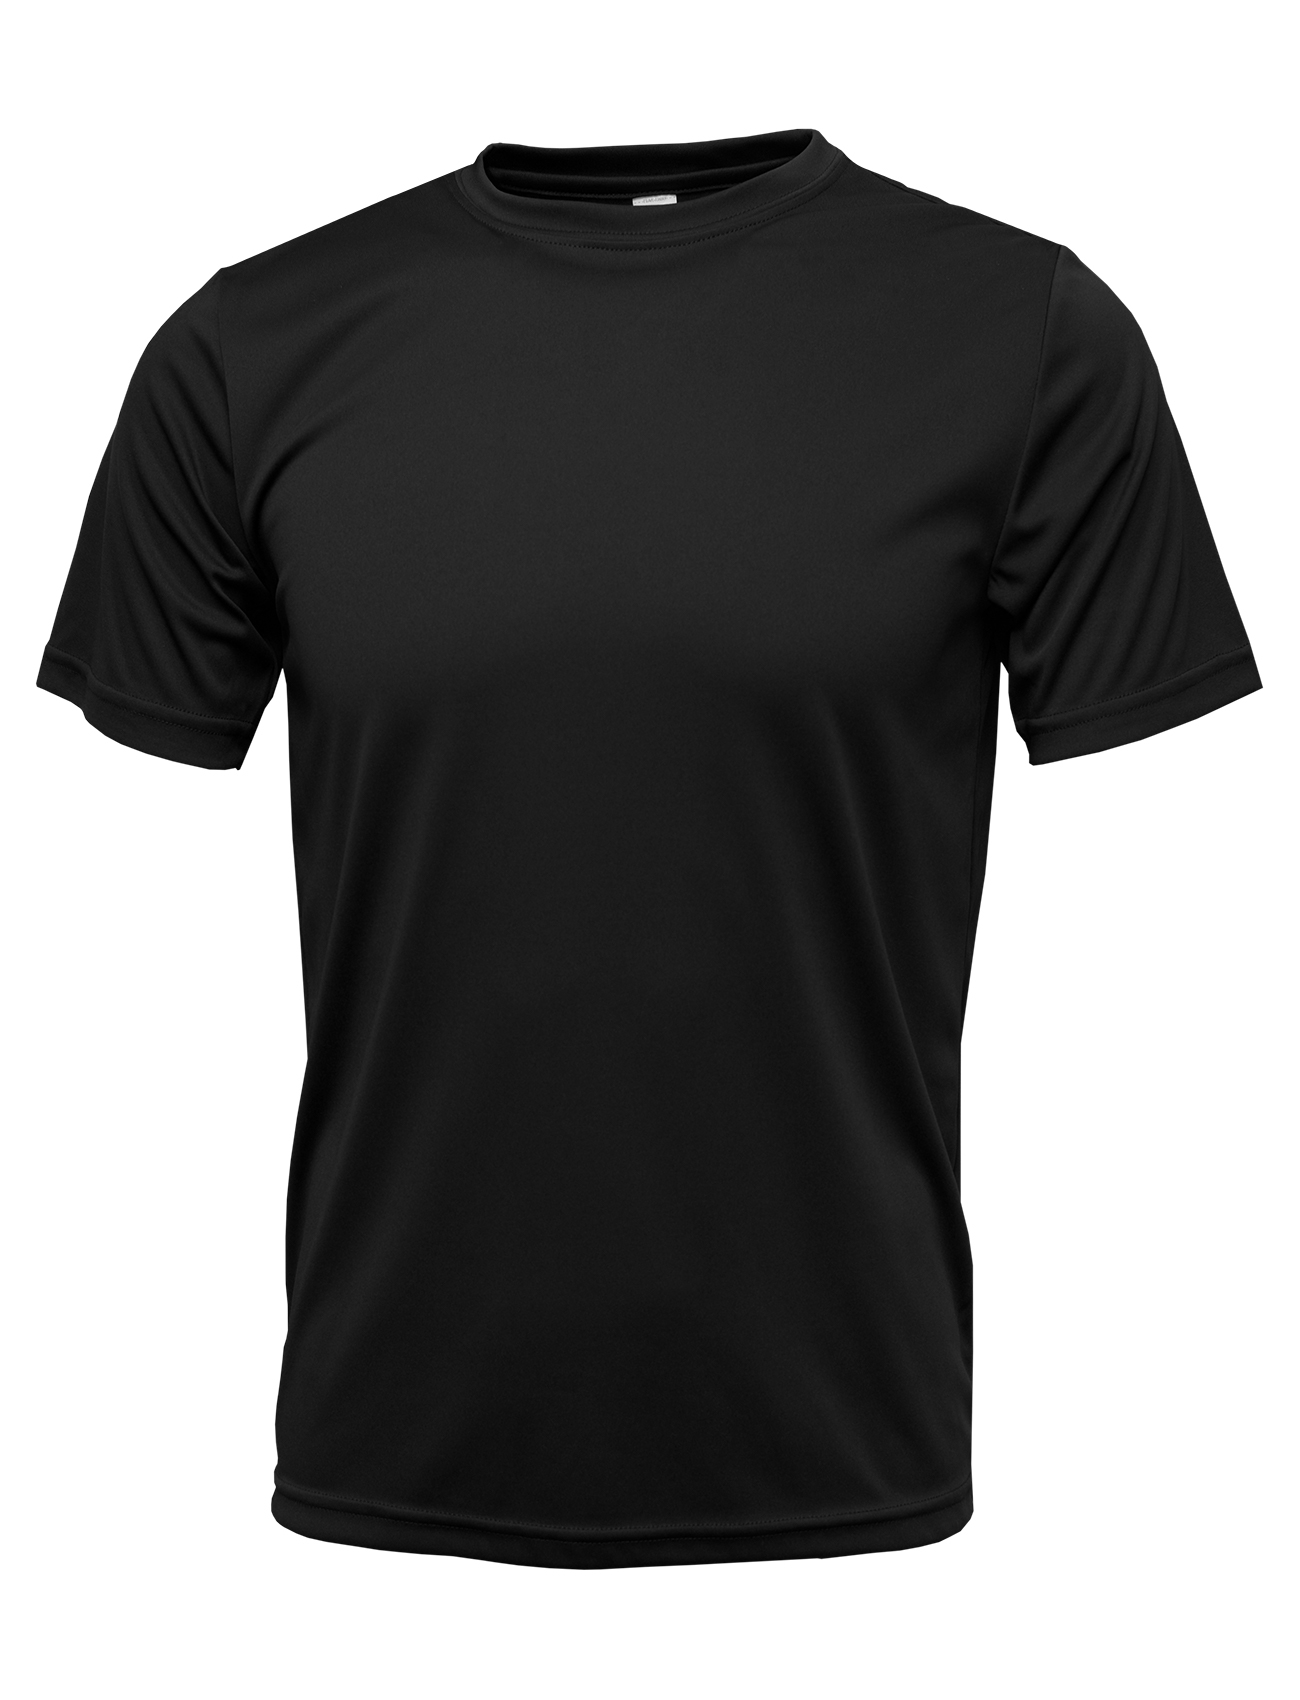 BAW Athletic Wear XT76 / XT76H - Men's Xtreme-Tek T-Shirt